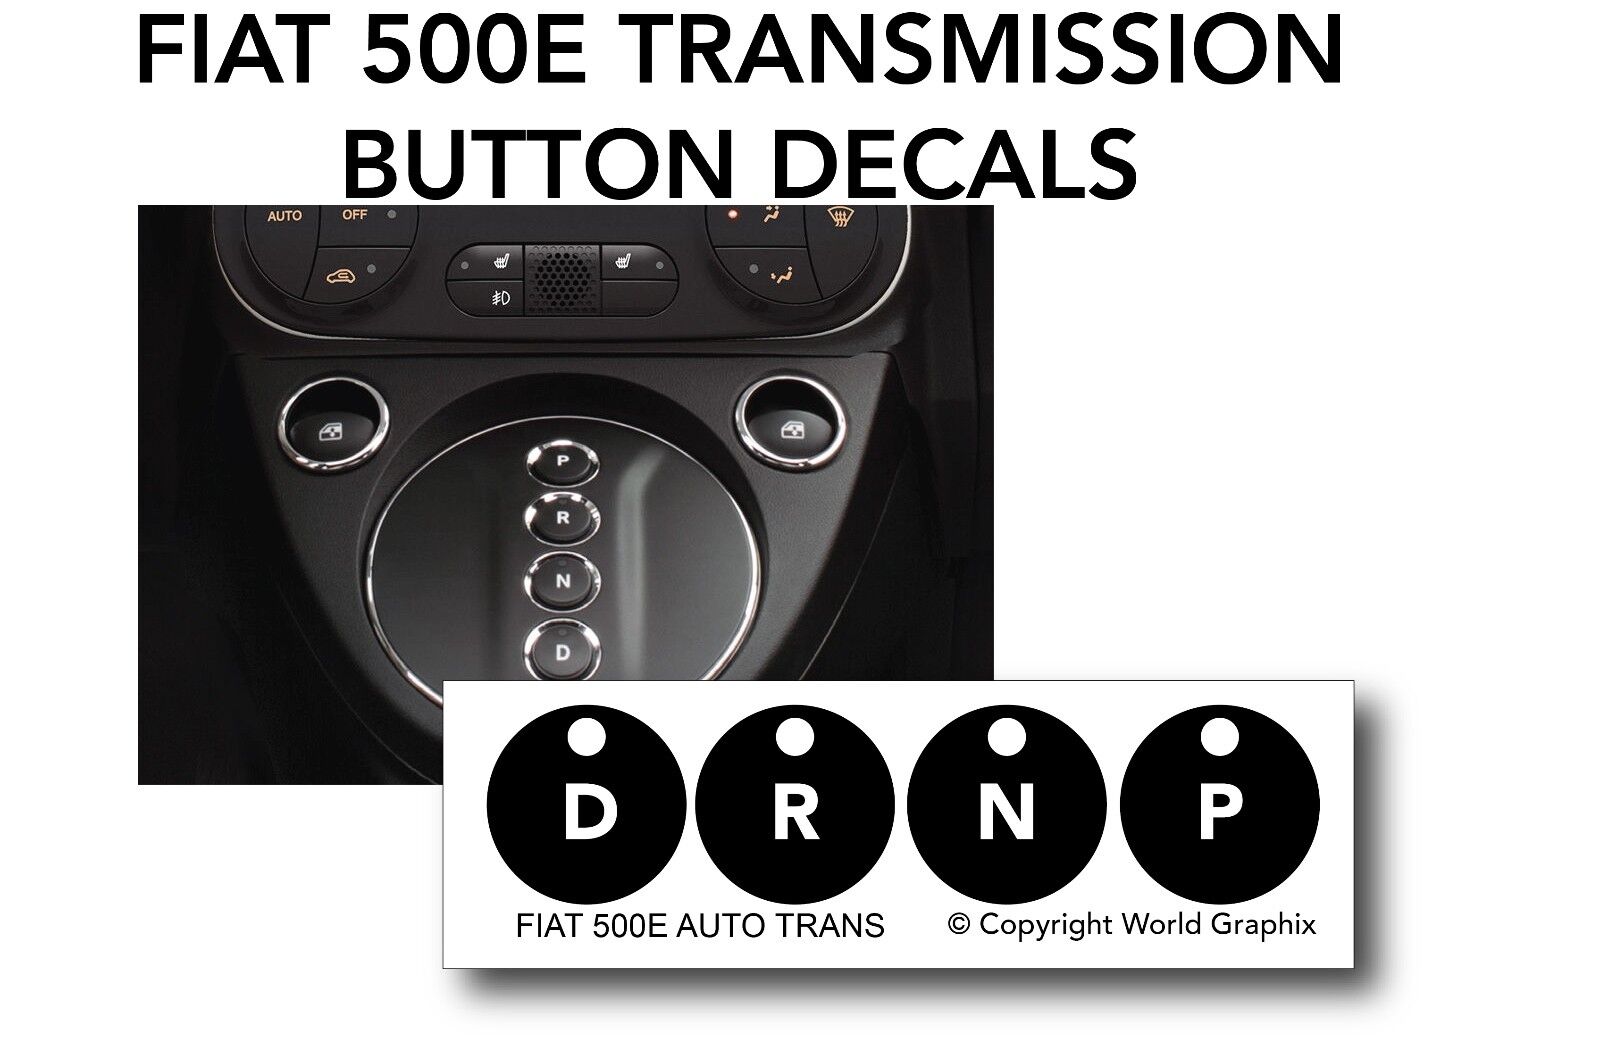 Fits FIAT 500E EV TRANSMISSION WORN PEELING BUTTON REPAIR DECALS STICKERS